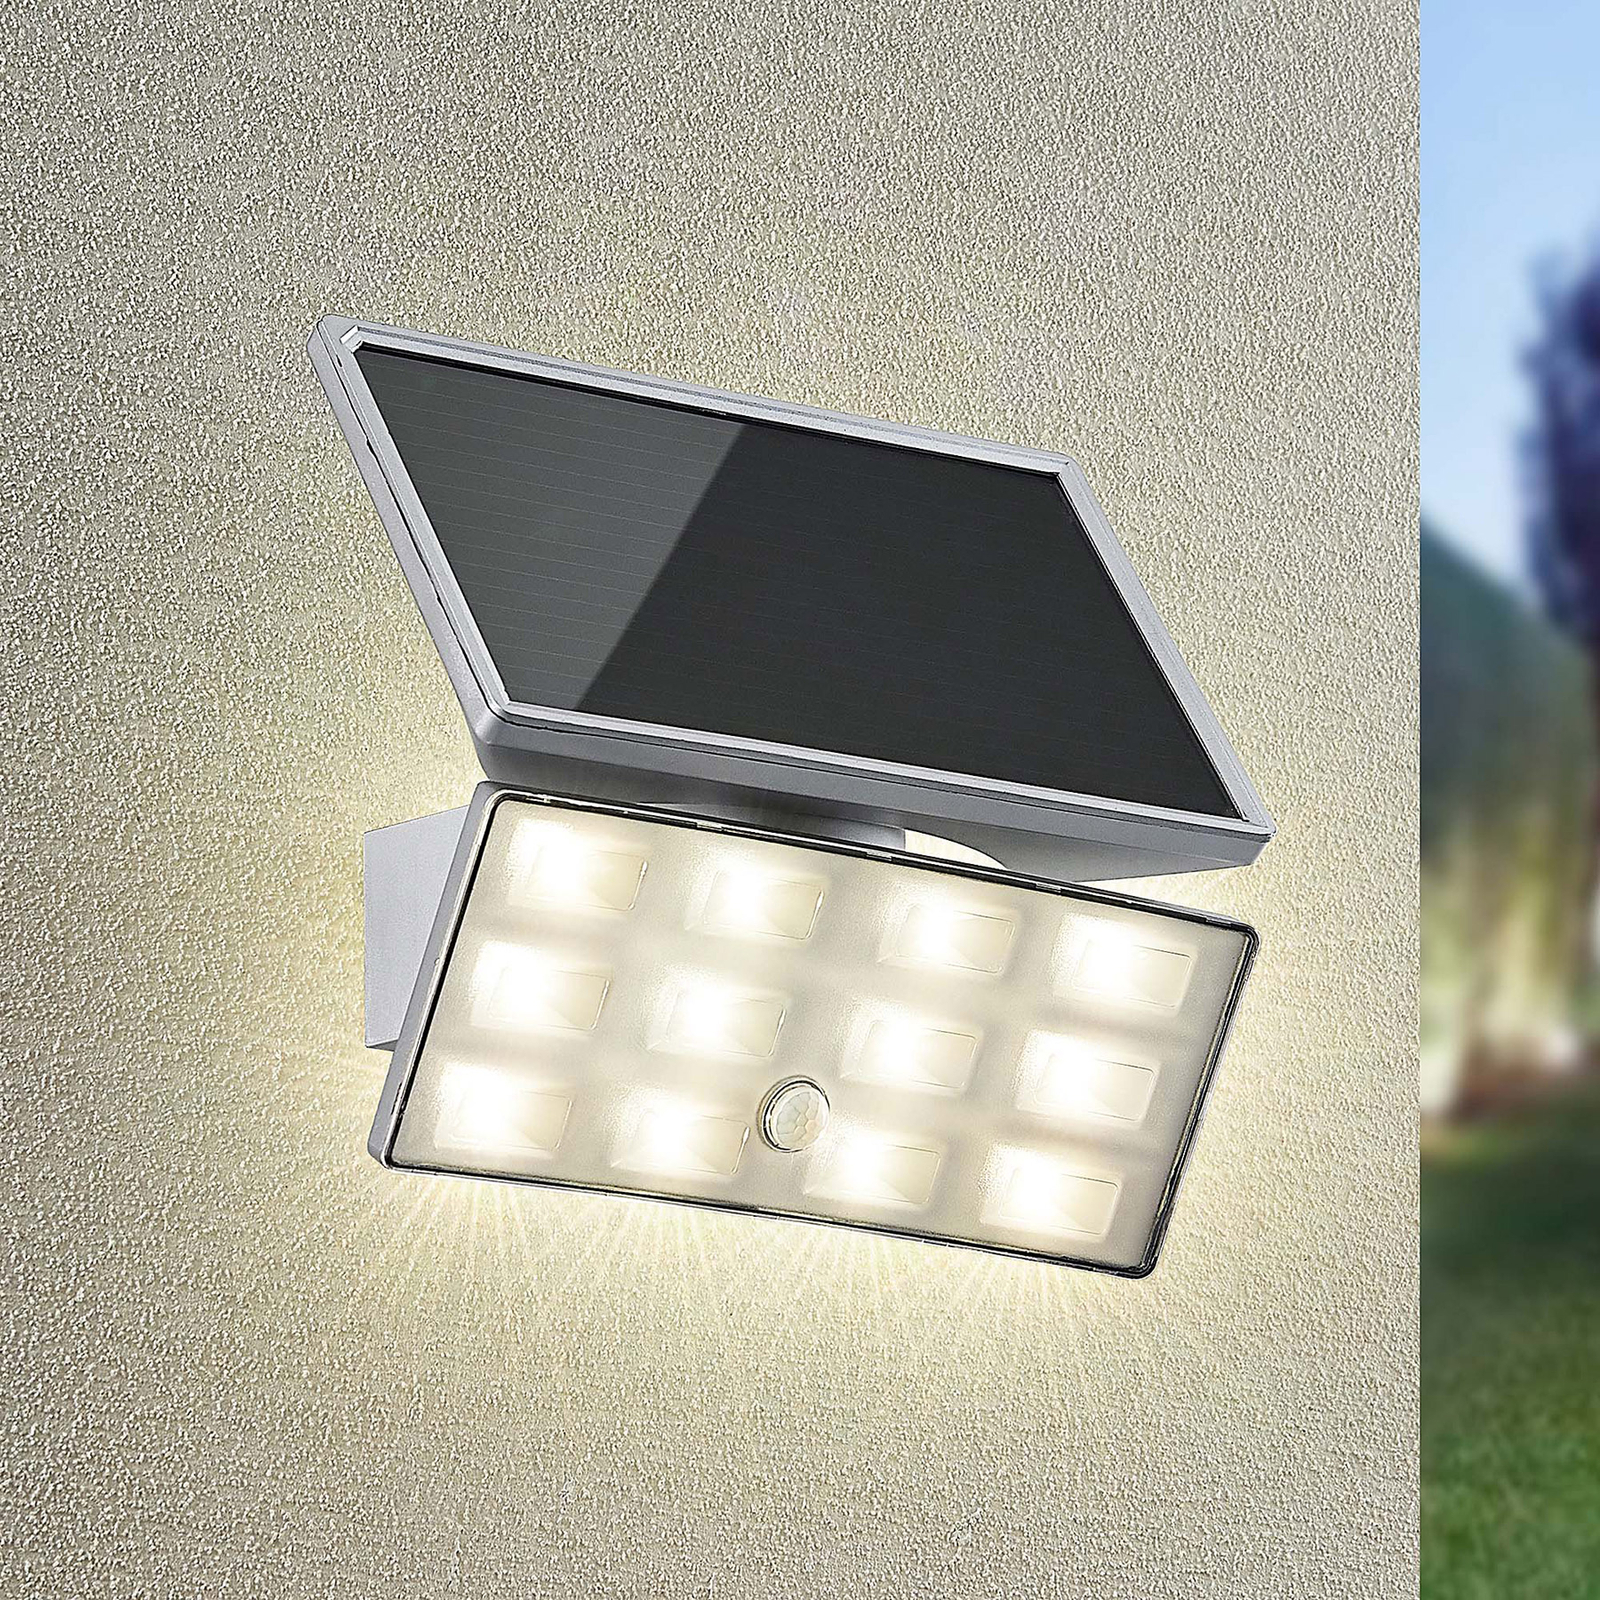 Prios Imsa LED outdoor wall spotlight sensor solar